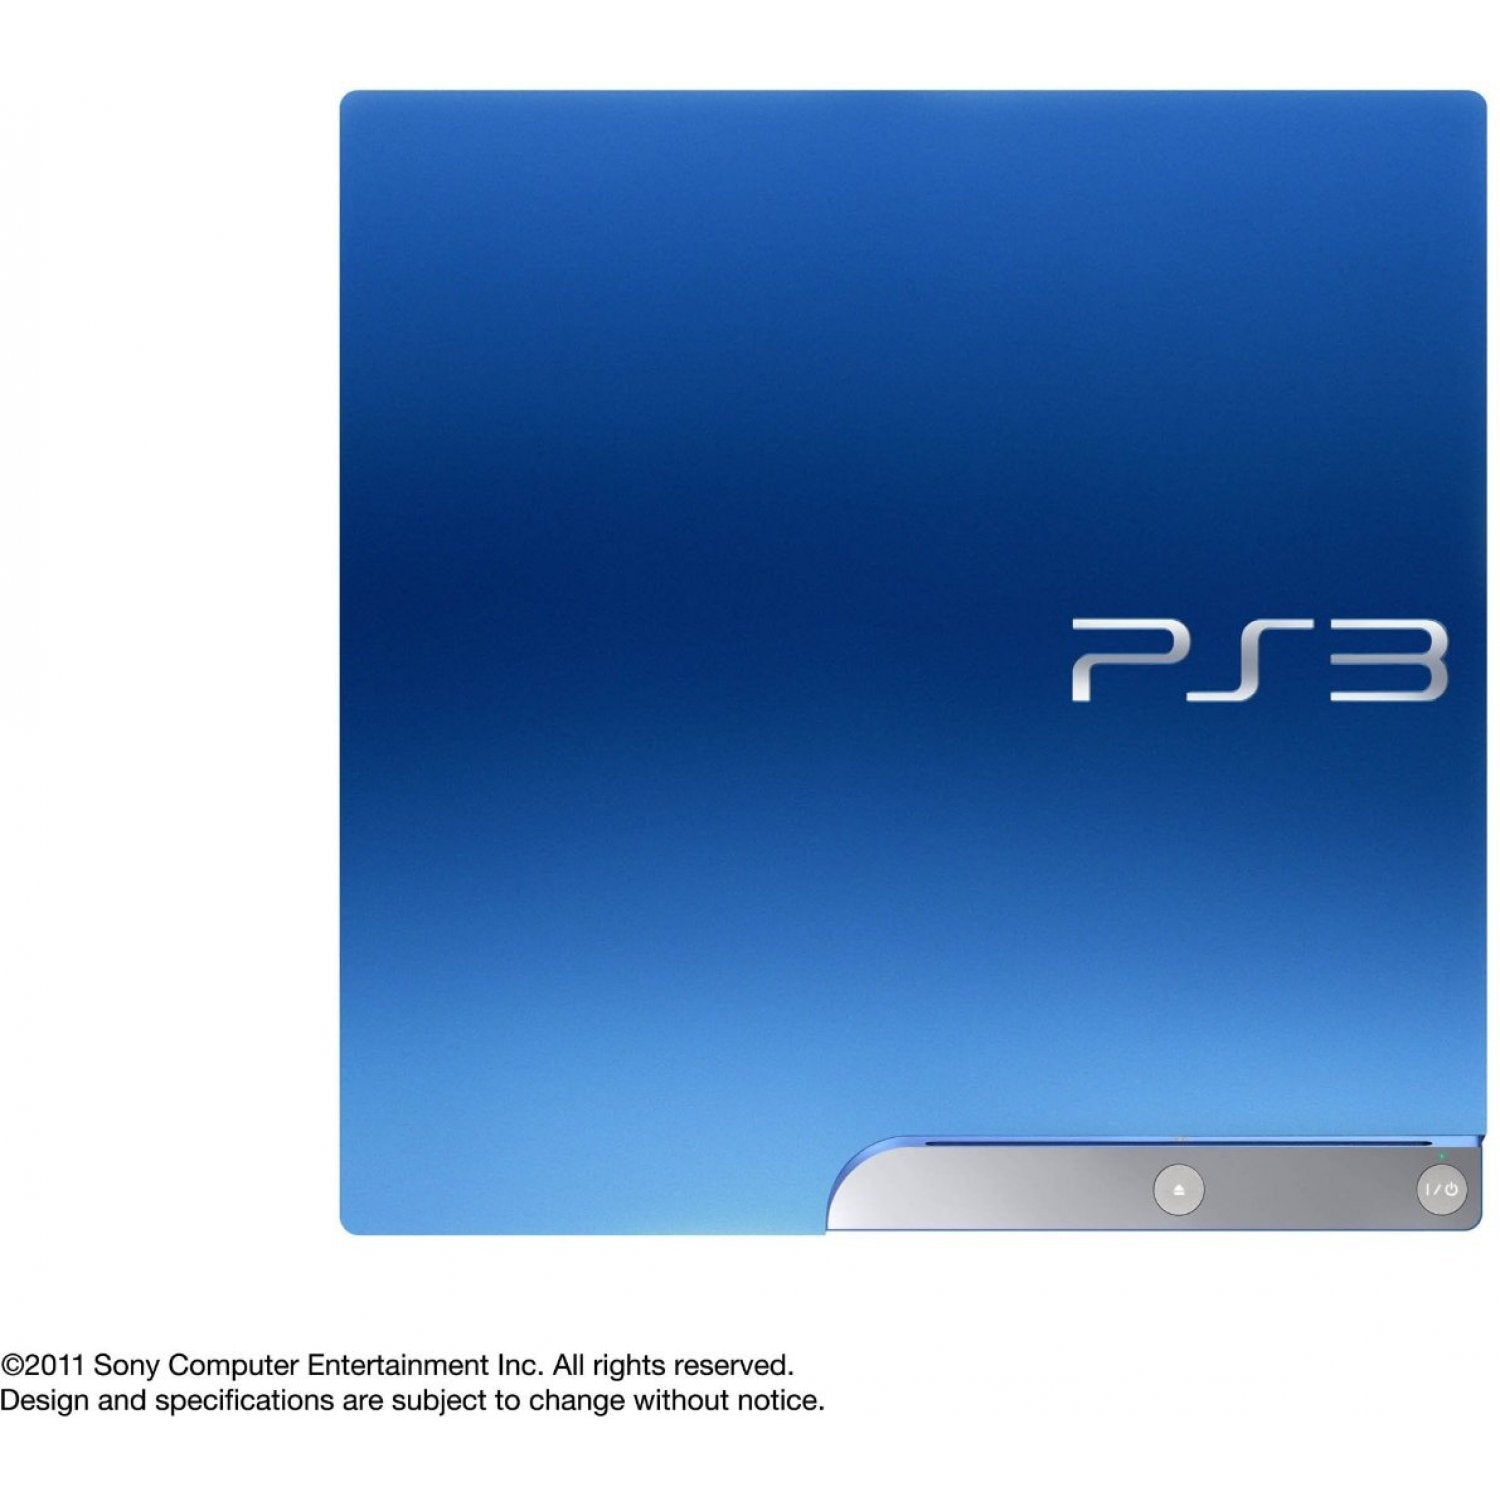 Sony 3 (PS3) Slim Splash Blue EDITION – RetroPixl